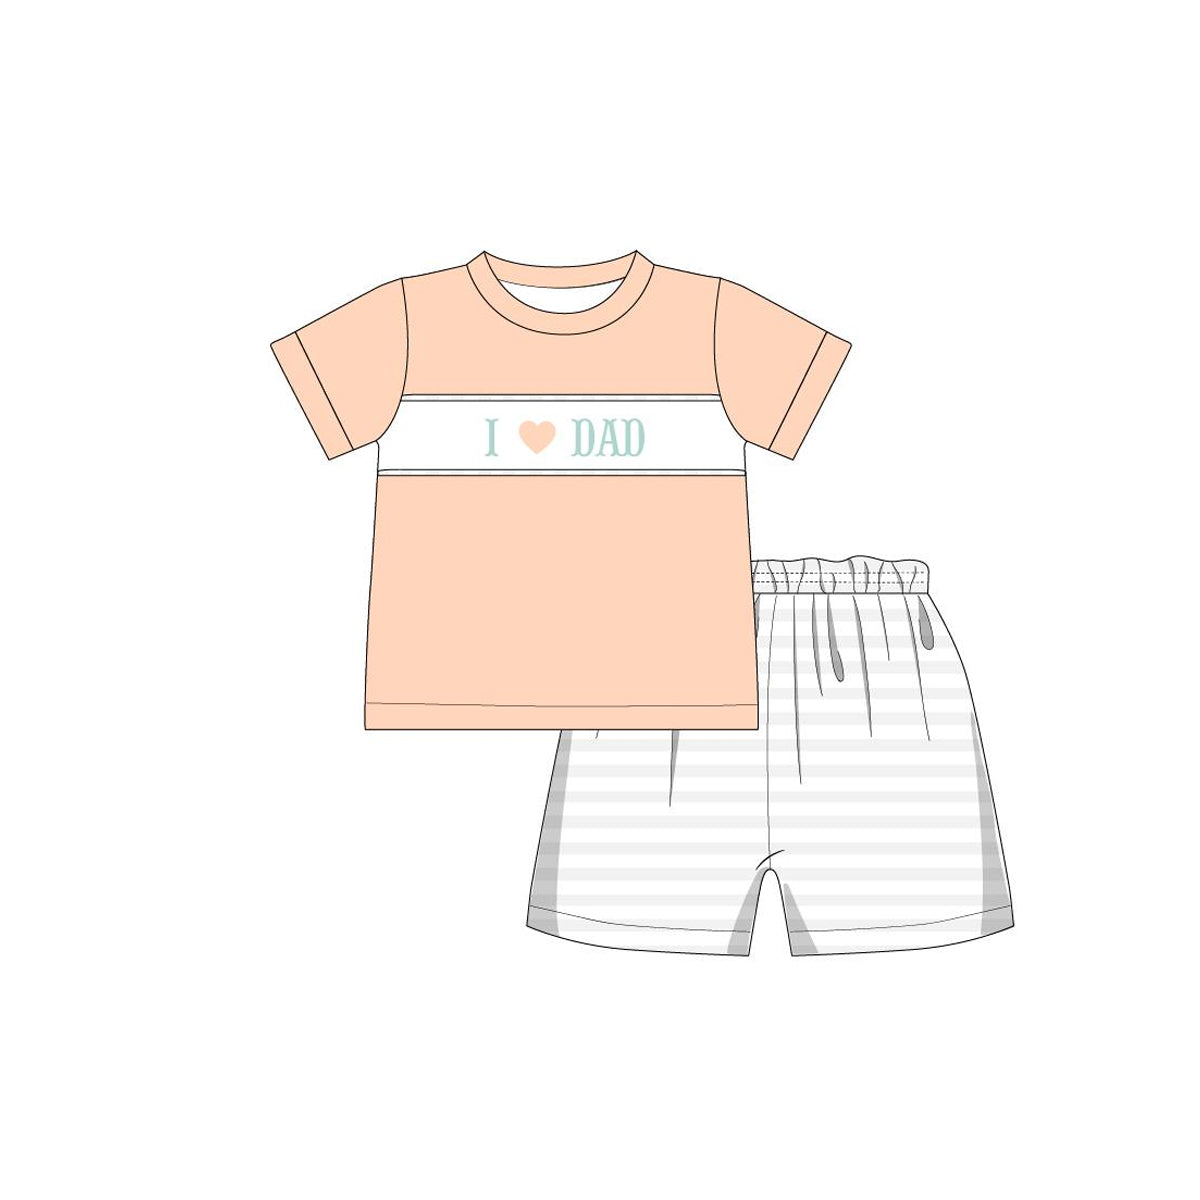 BSSO0752 boys I LOVE DAD light orange short sleeve shorts suit custom moq 3 eta 6-8week